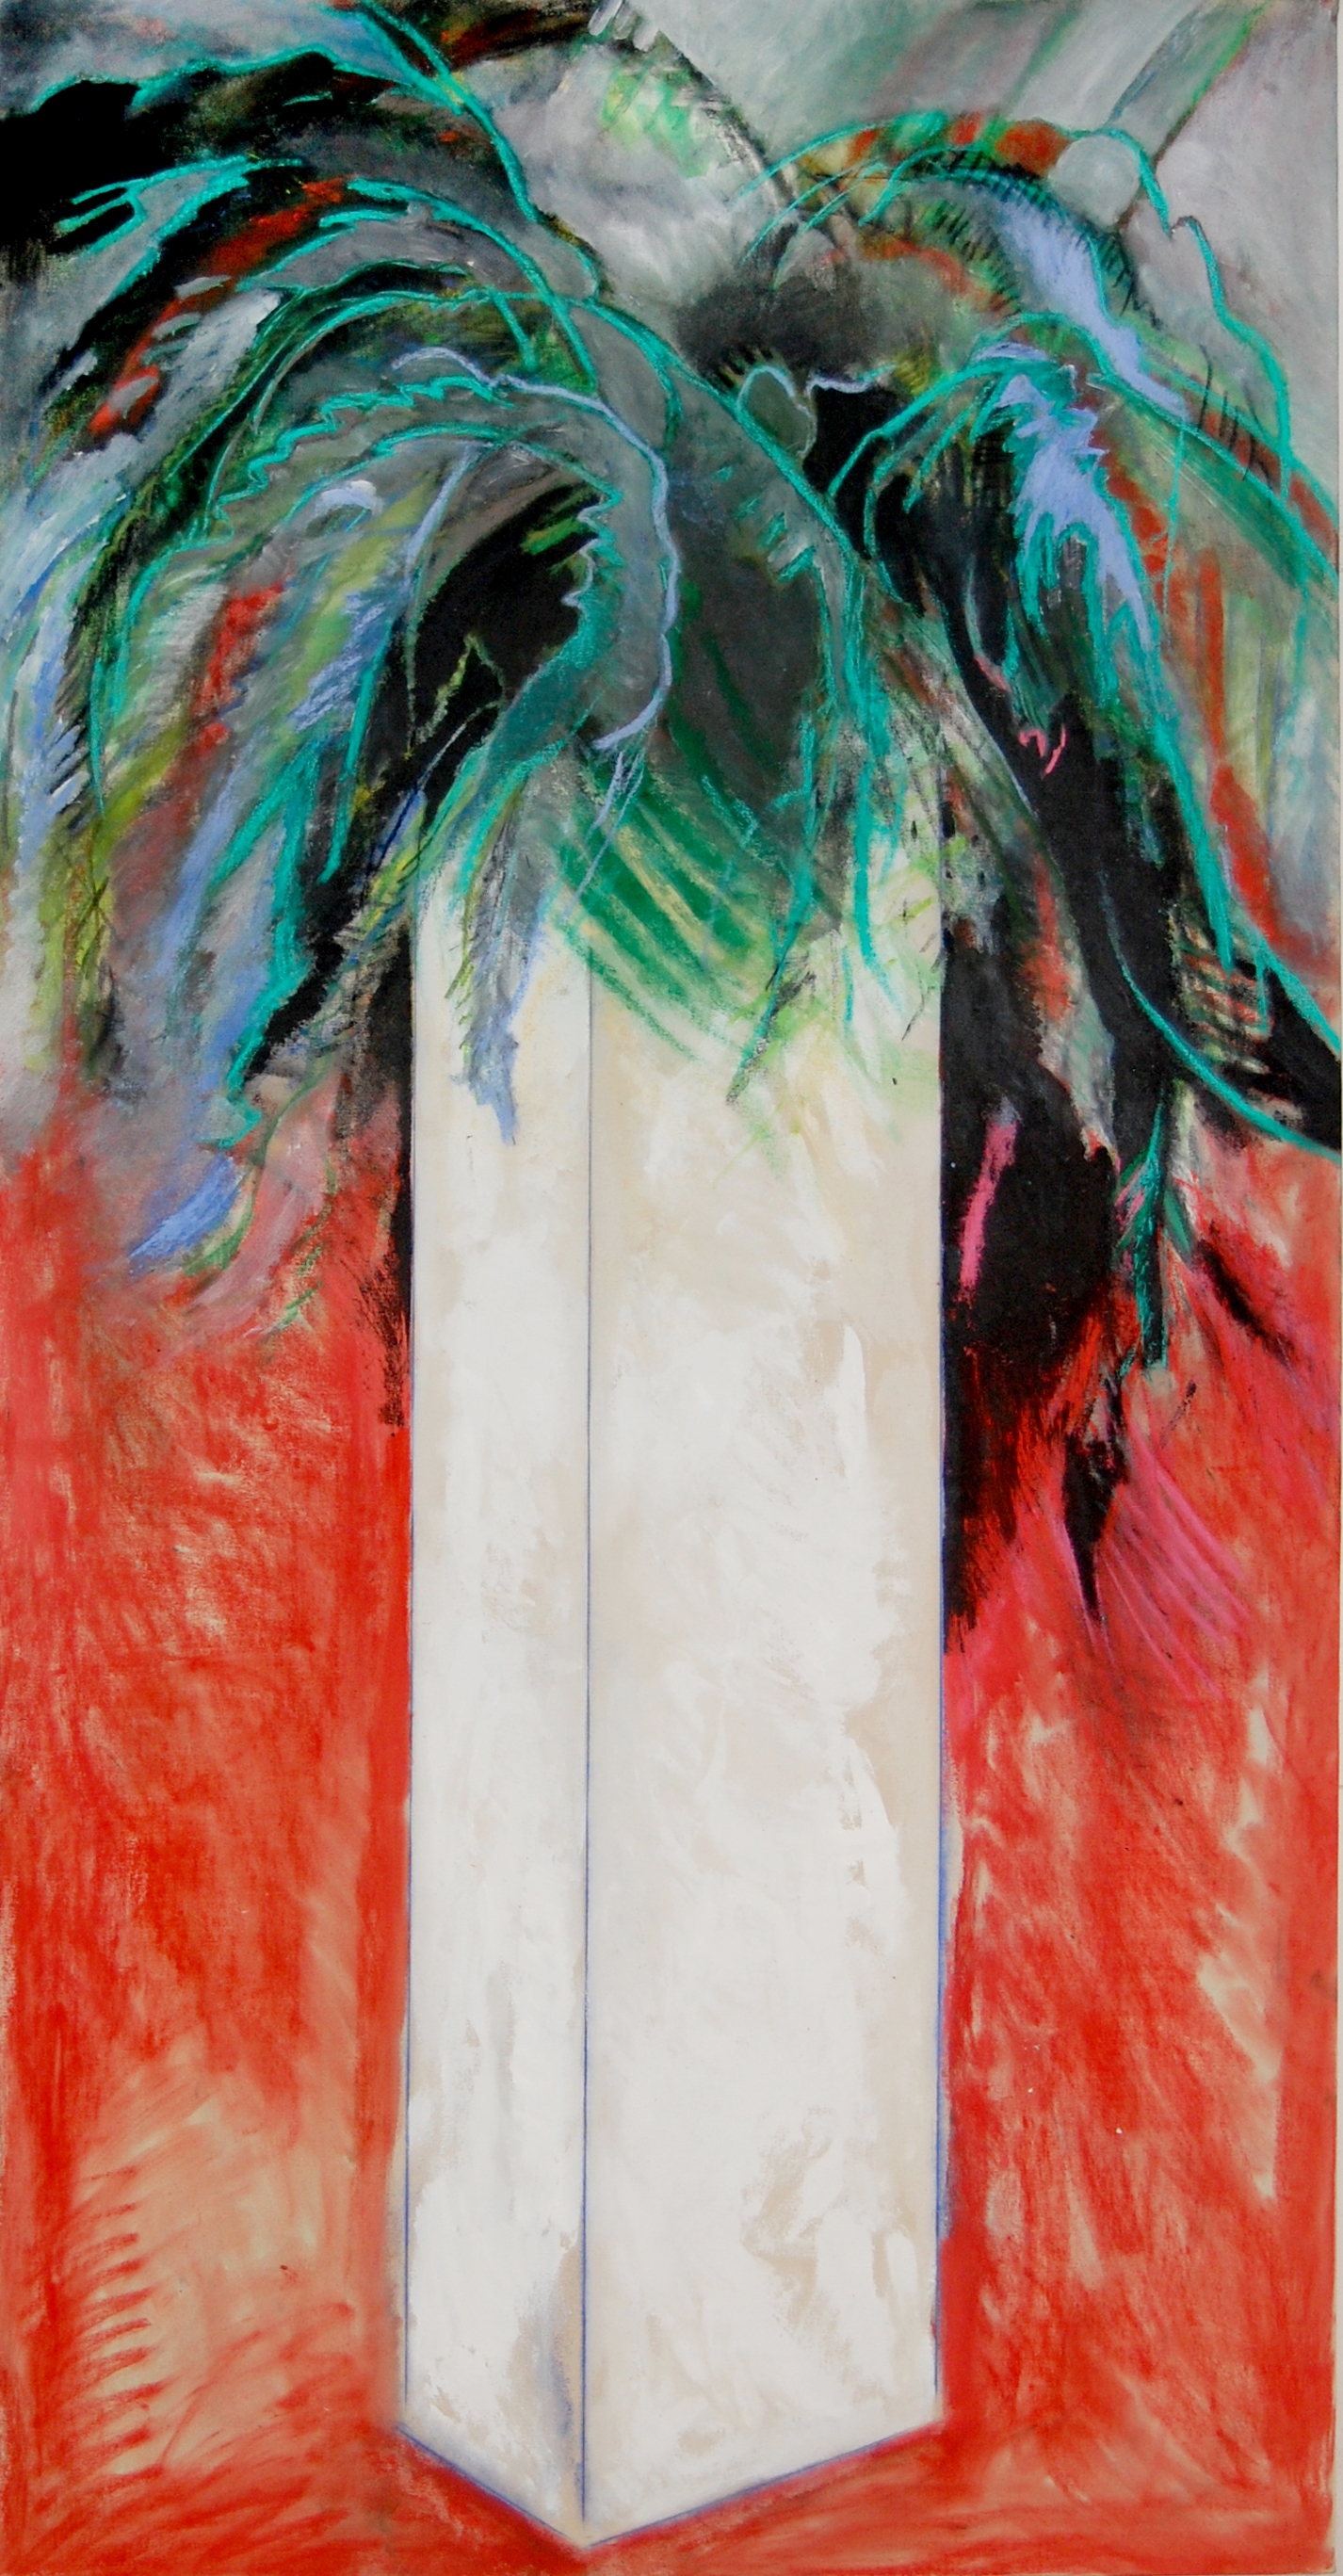  Gallery Fern, 4'x8', pastel on canvas 